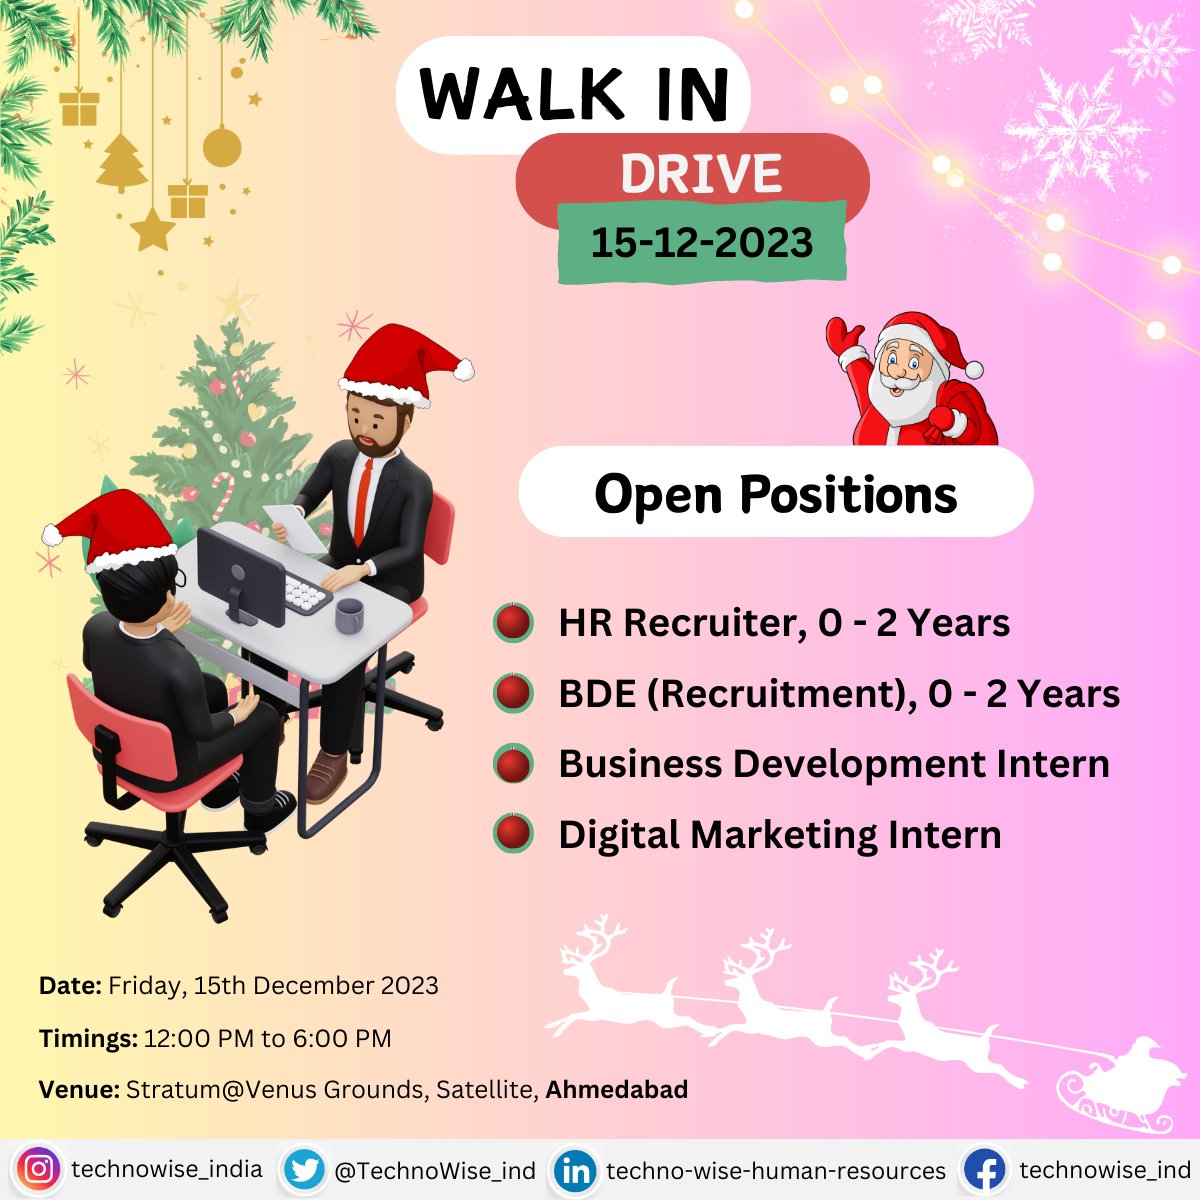 𝗙𝗿𝗲𝘀𝗵𝗲𝗿𝘀 𝗹𝗼𝗼𝗸𝗶𝗻𝗴 𝘁𝗼 𝗸𝗶𝗰𝗸-𝘀𝘁𝗮𝗿𝘁 𝘁𝗵𝗲𝗶𝗿 𝗰𝗮𝗿𝗲𝗲𝗿 𝗶𝗻 𝗛𝗥 𝗥𝗲𝗰𝗿𝘂𝗶𝘁𝗺𝗲𝗻𝘁

#Recruiter #ITRecruitment #HR #DigitalMarketing #BDE #Christmas #Freshers #Recruitment #WalkIn #WalkInDrive #Jobs #Ahmedabad

Follow: #TechnoWise_India